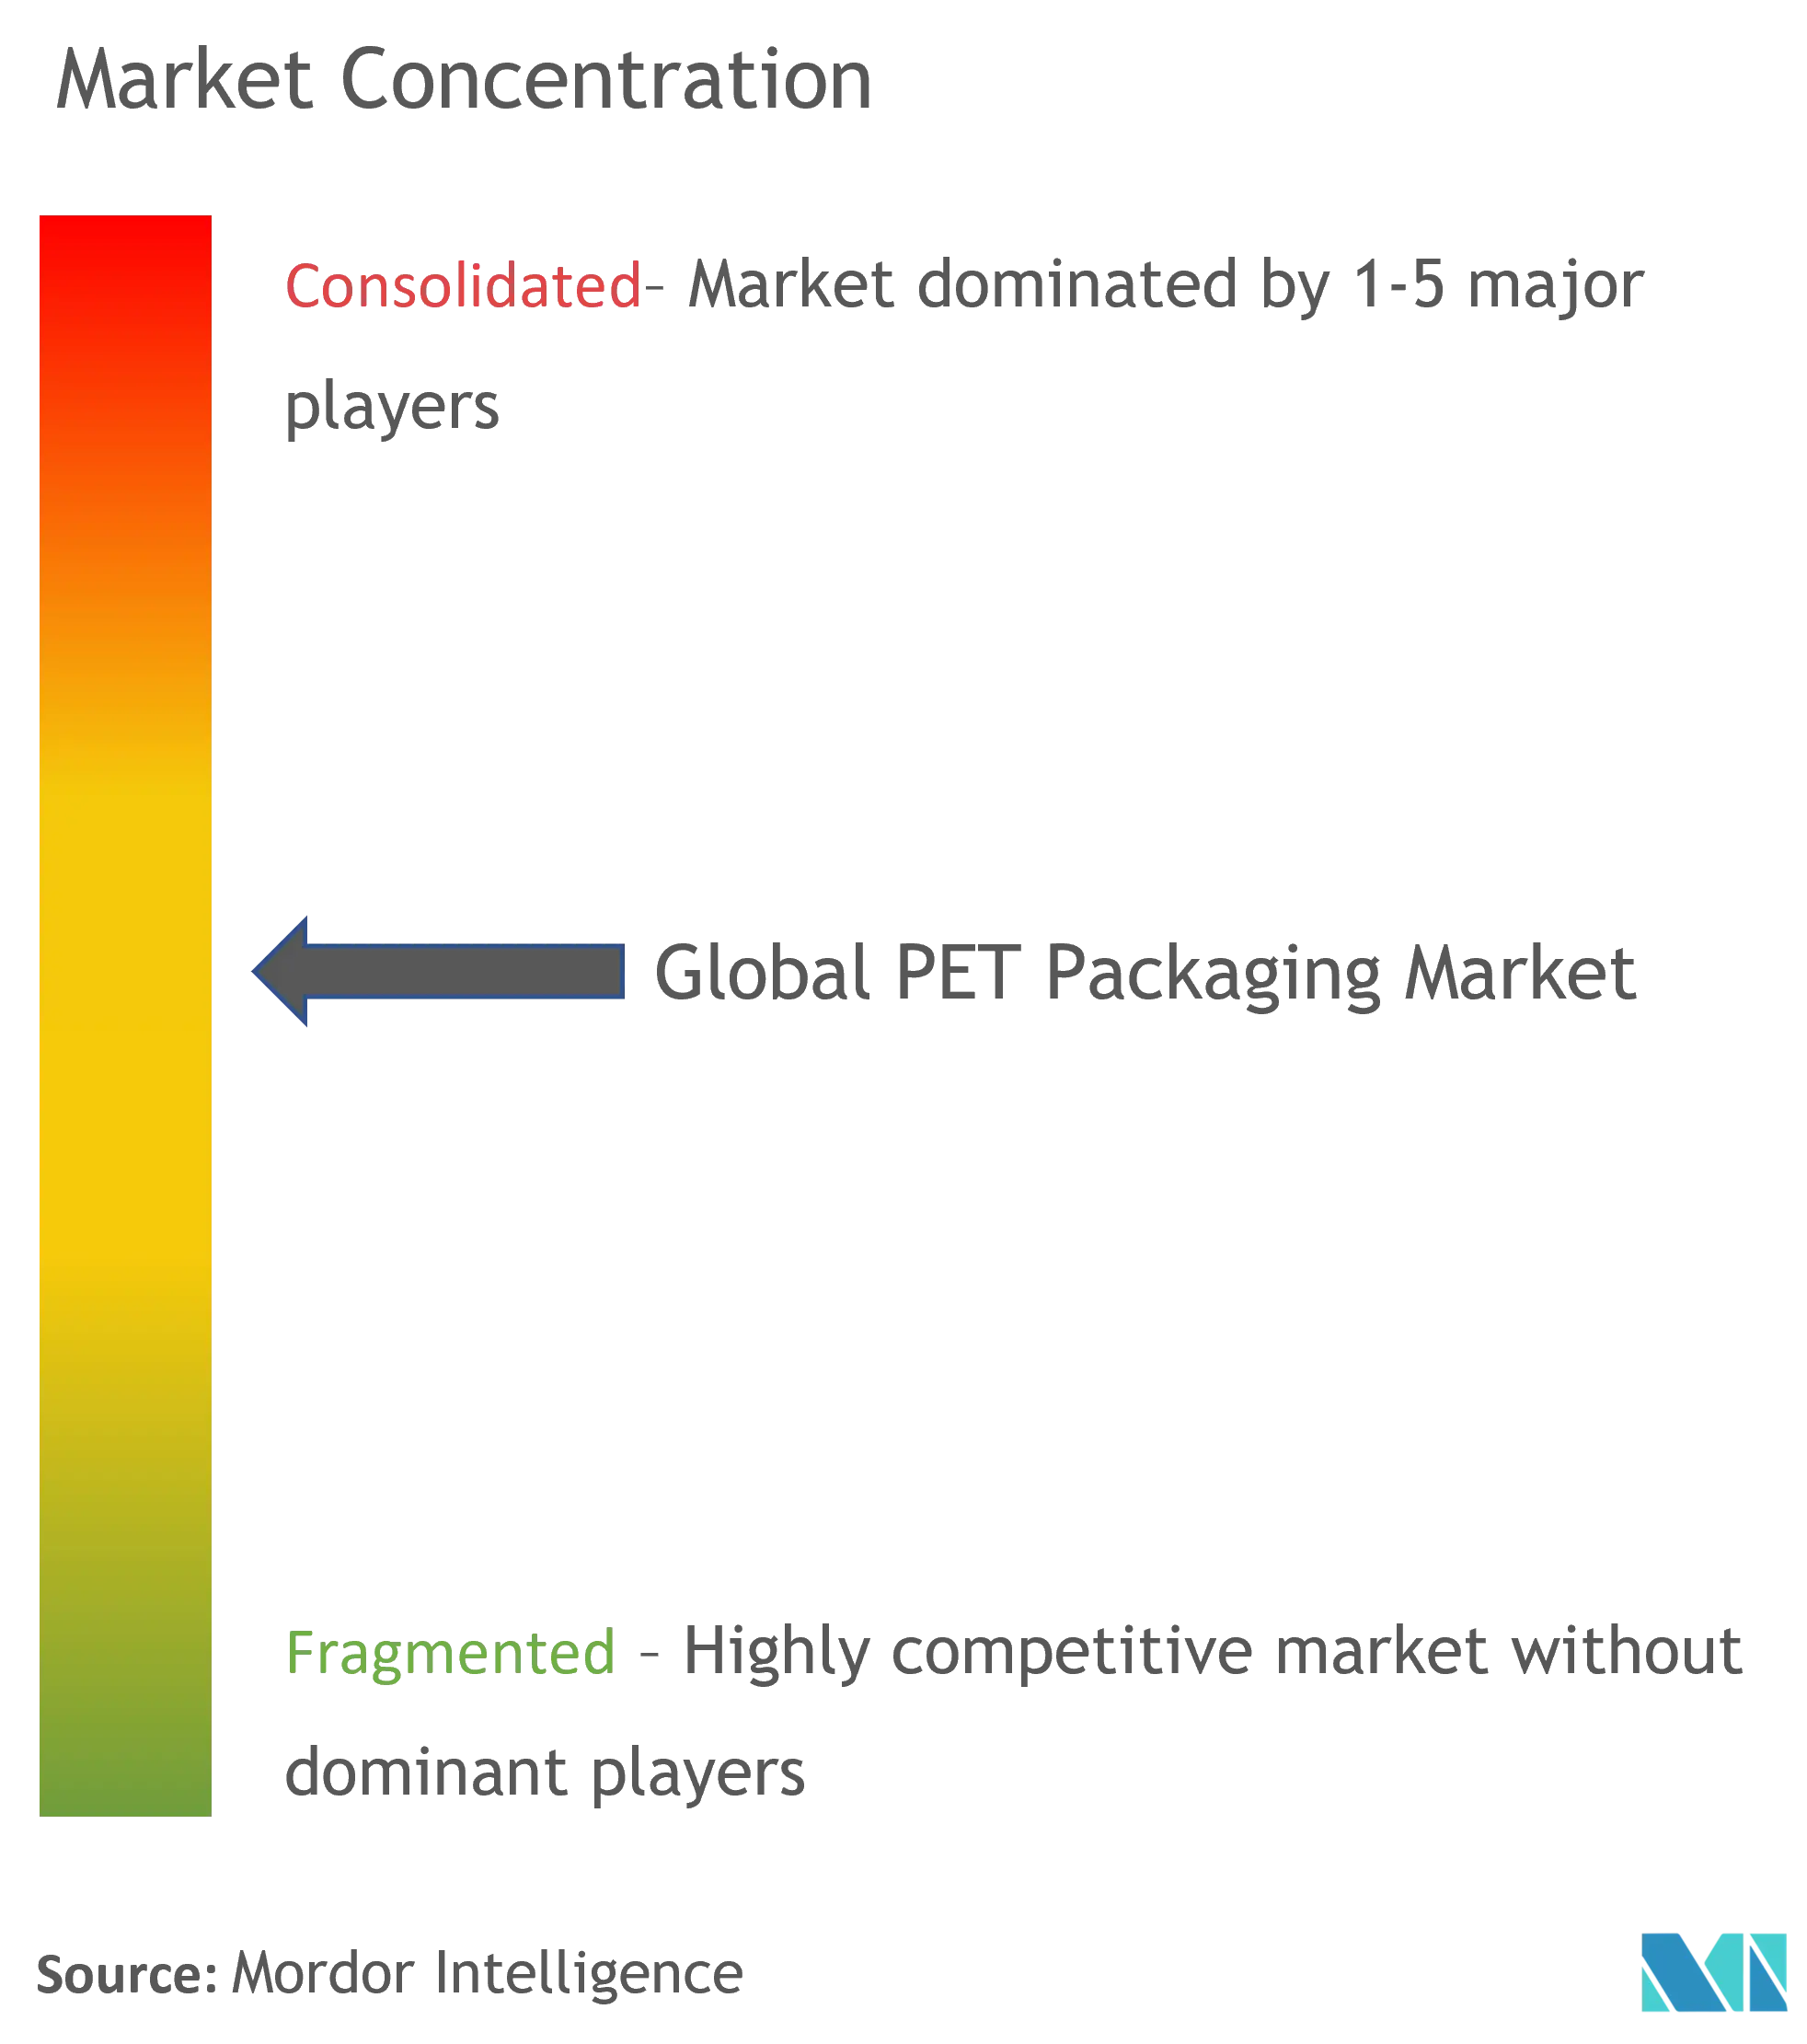 Pet Packaging Market Concentration